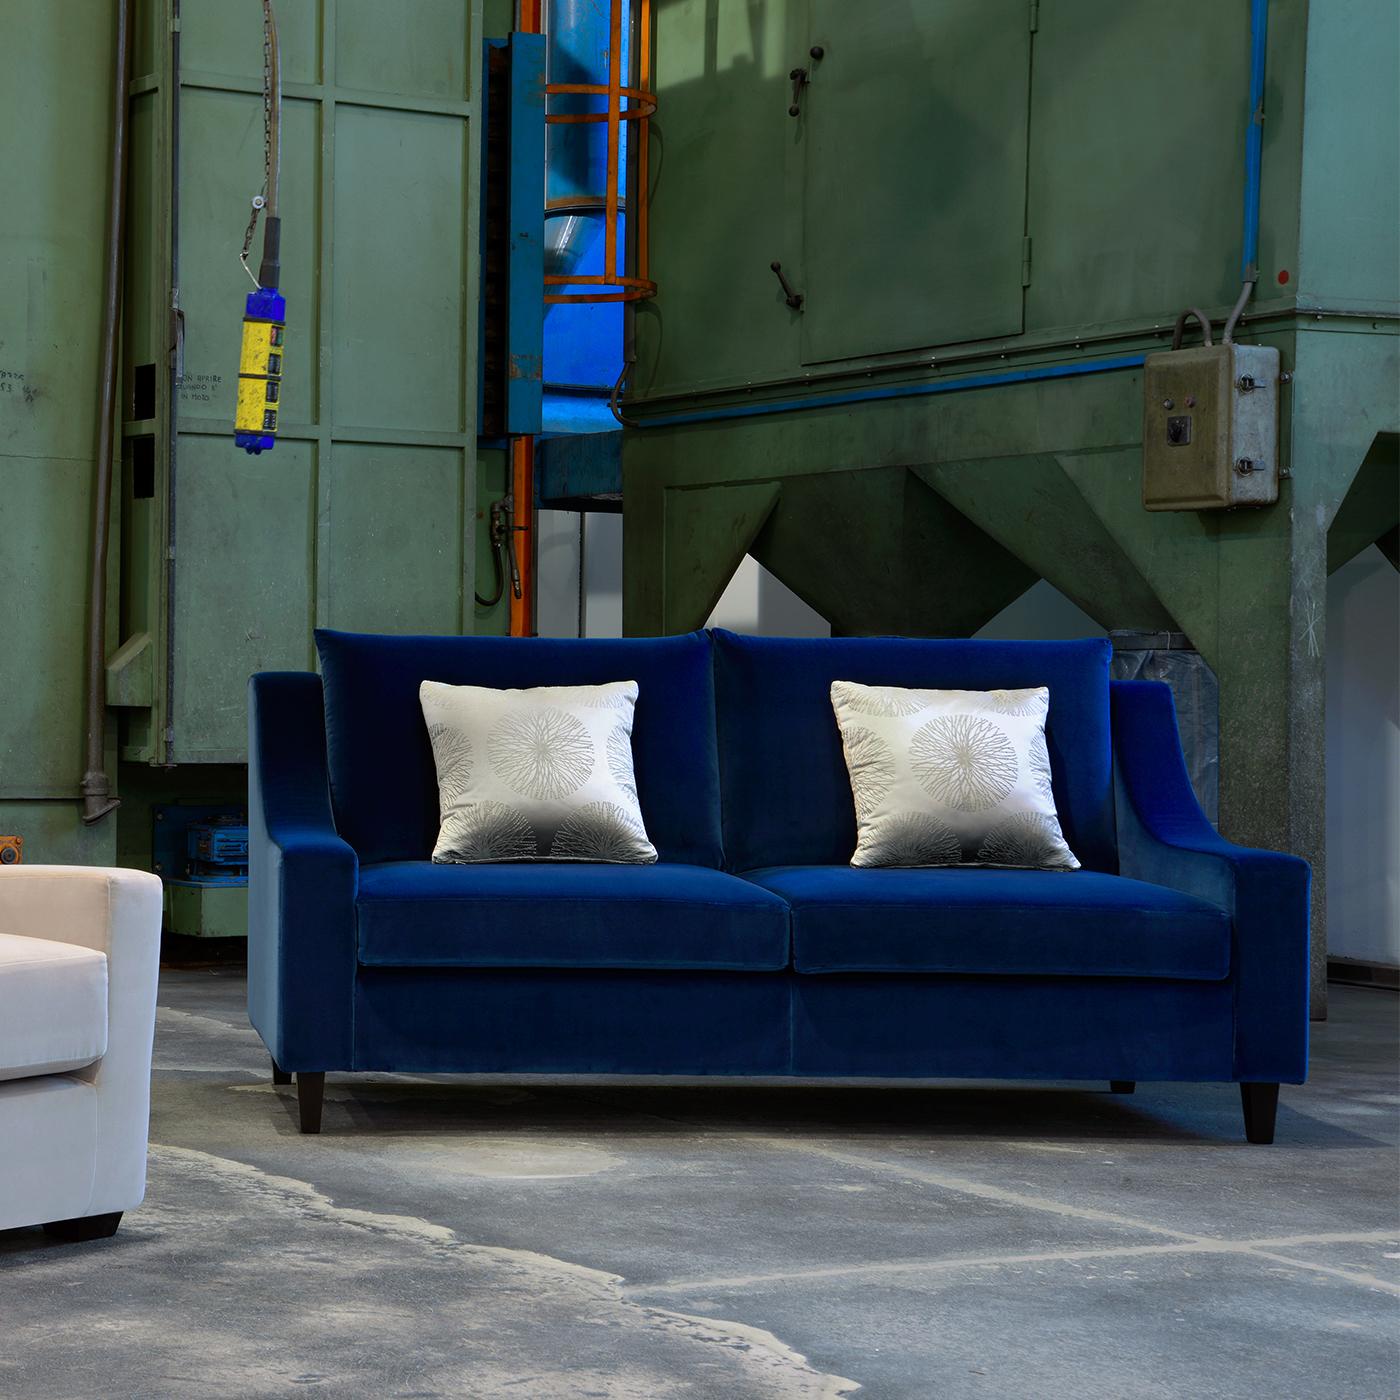 cobalt blue couch